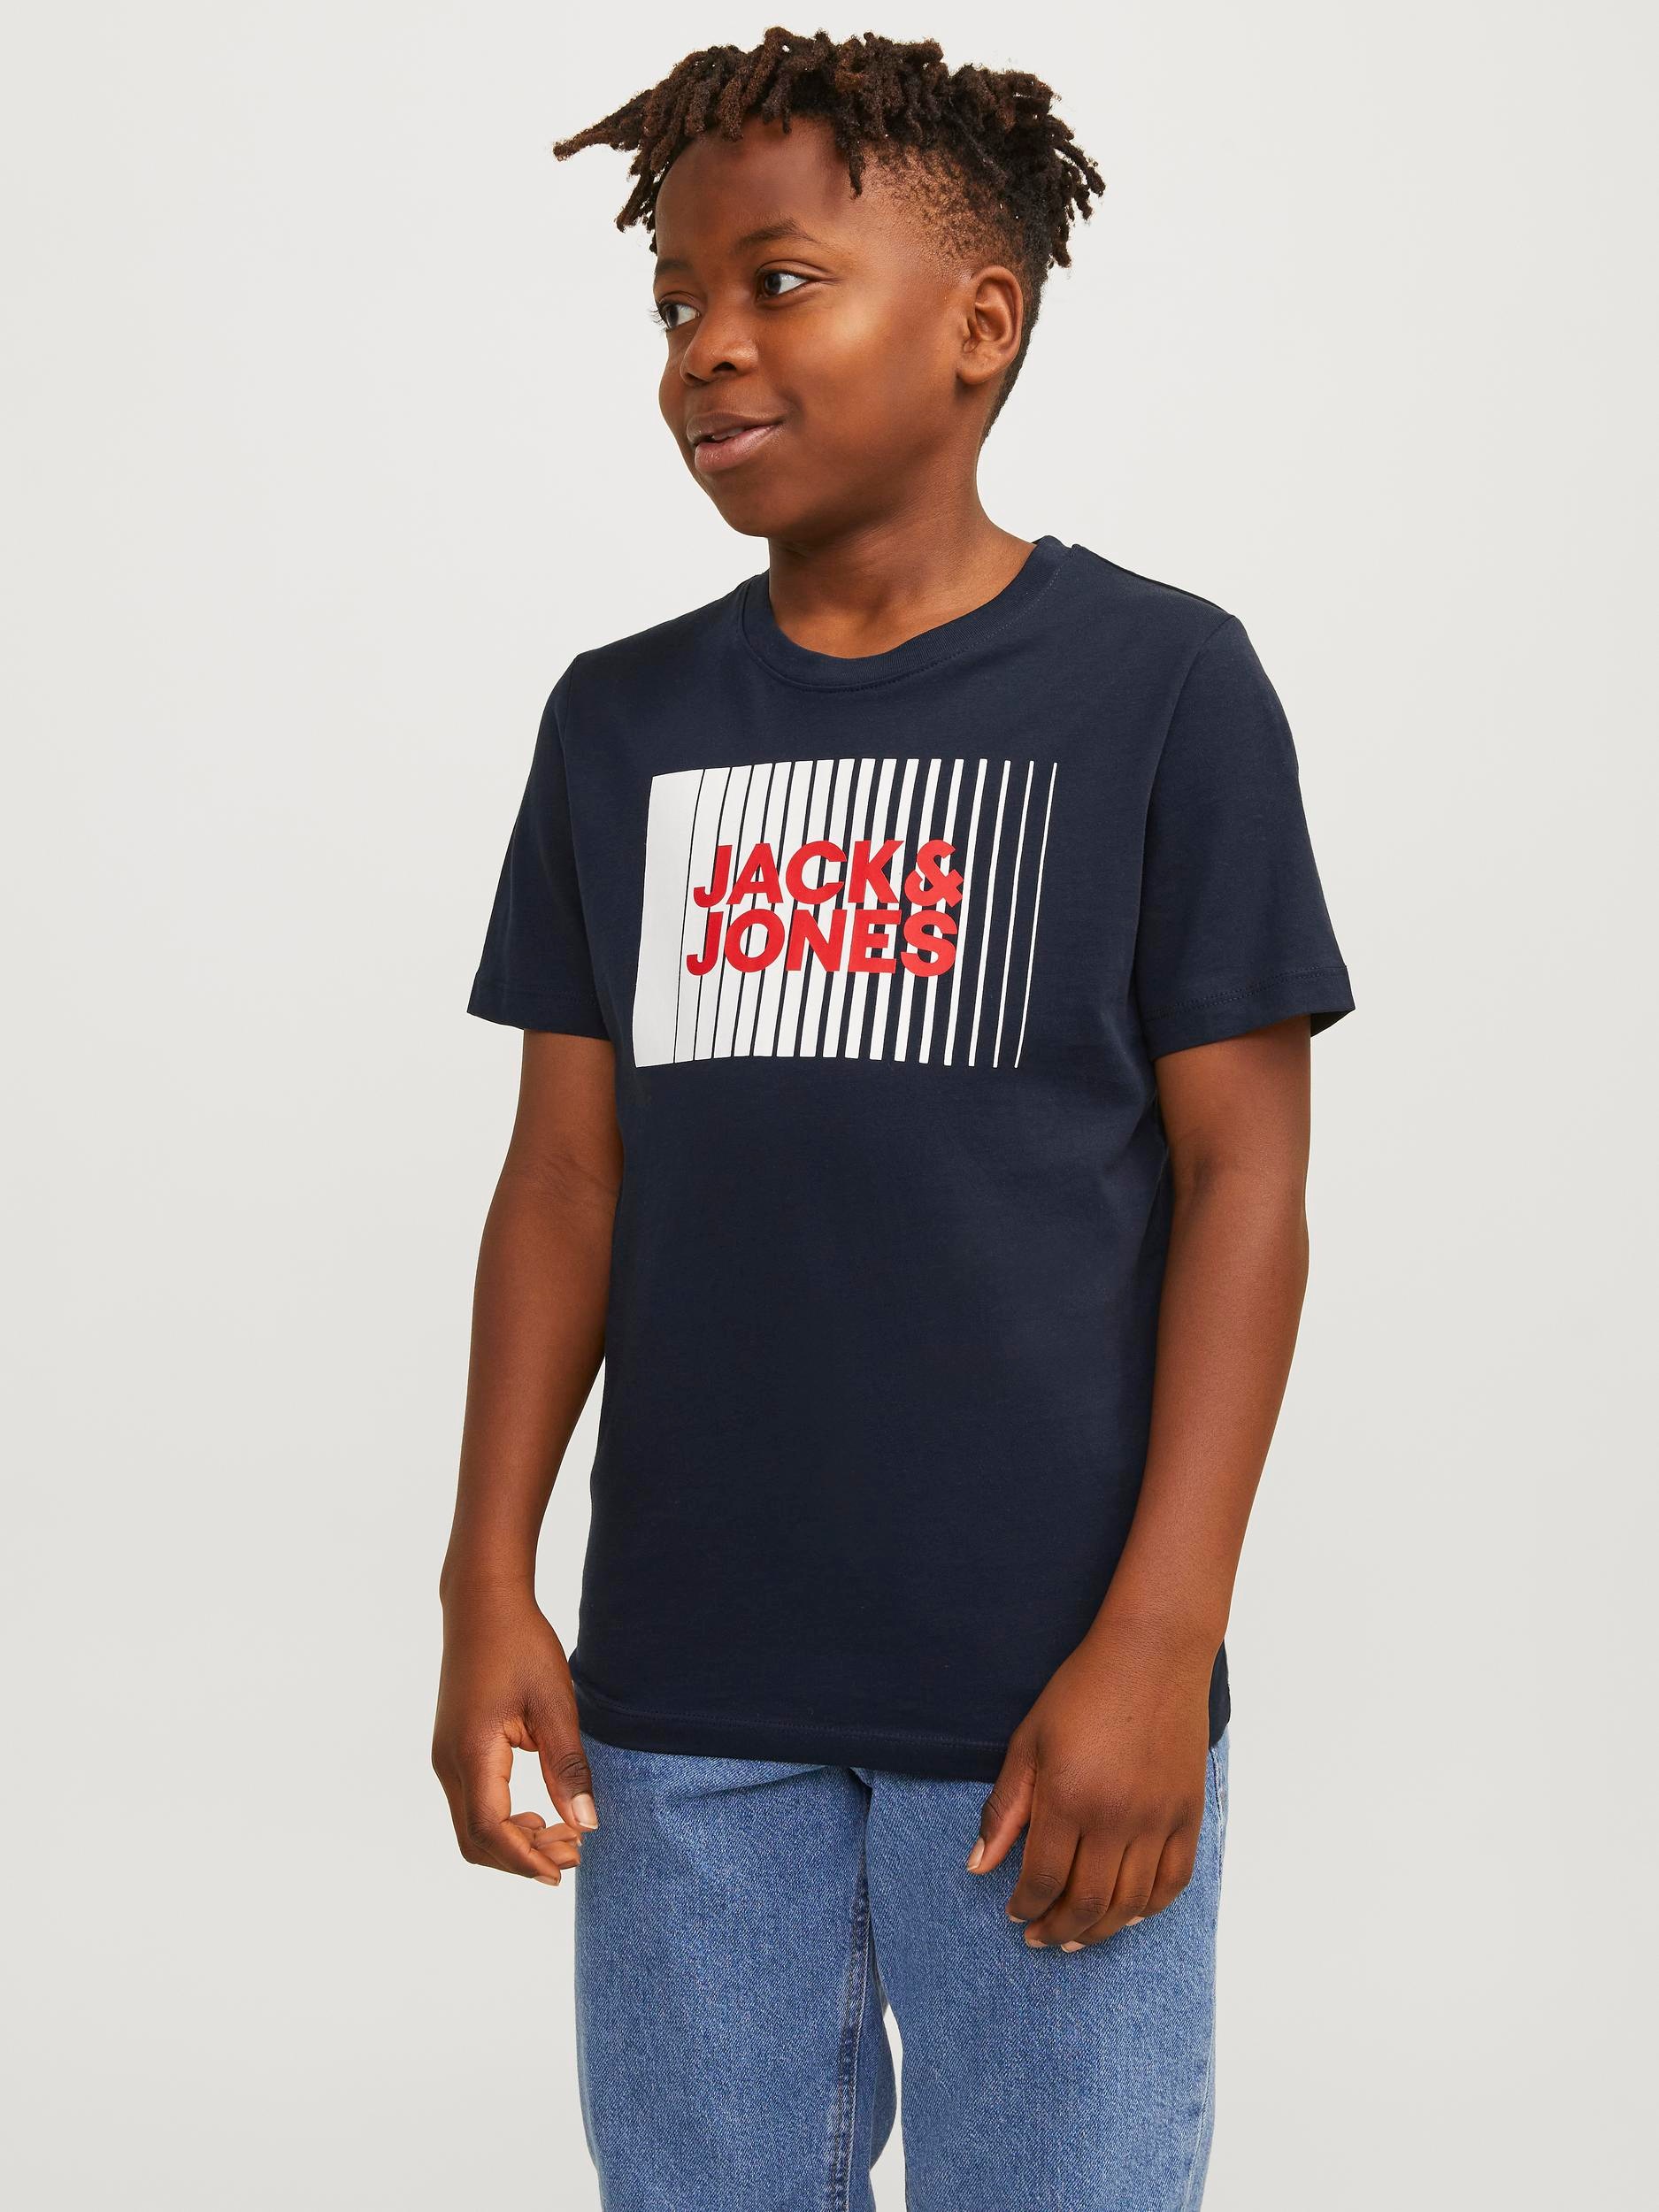 Jack Jones T-Shirt, tlg.) (Packung, Junior & online kaufen 2